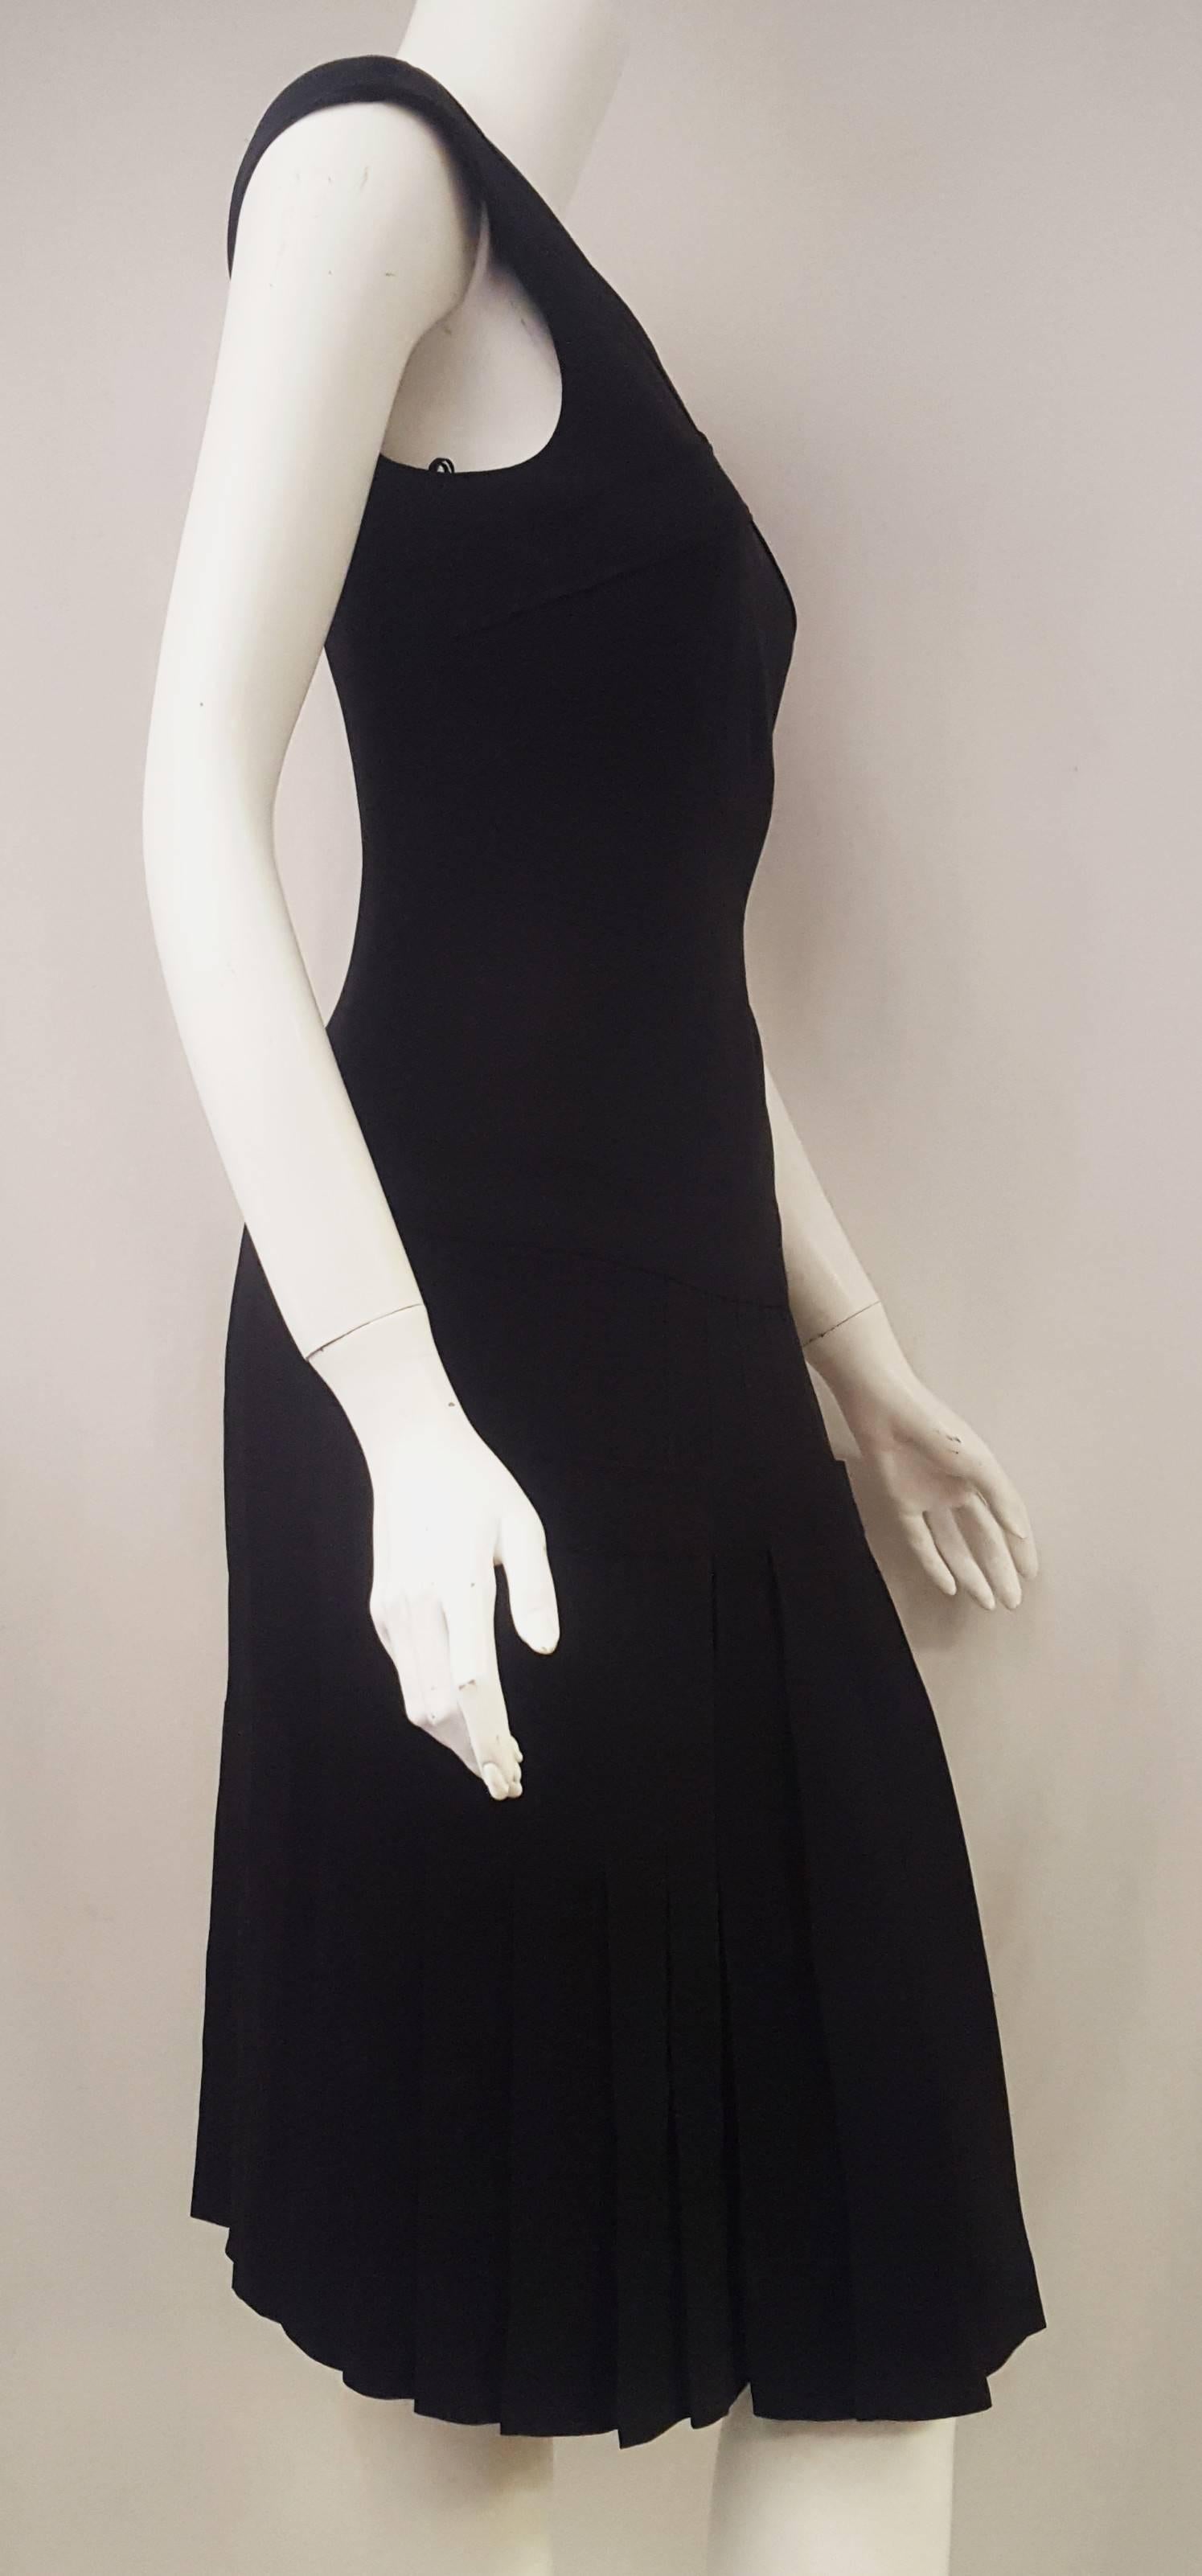 Women's Classy Chanel Black Silk Dress with Drop Waist Crisscross Detail at Neckline For Sale